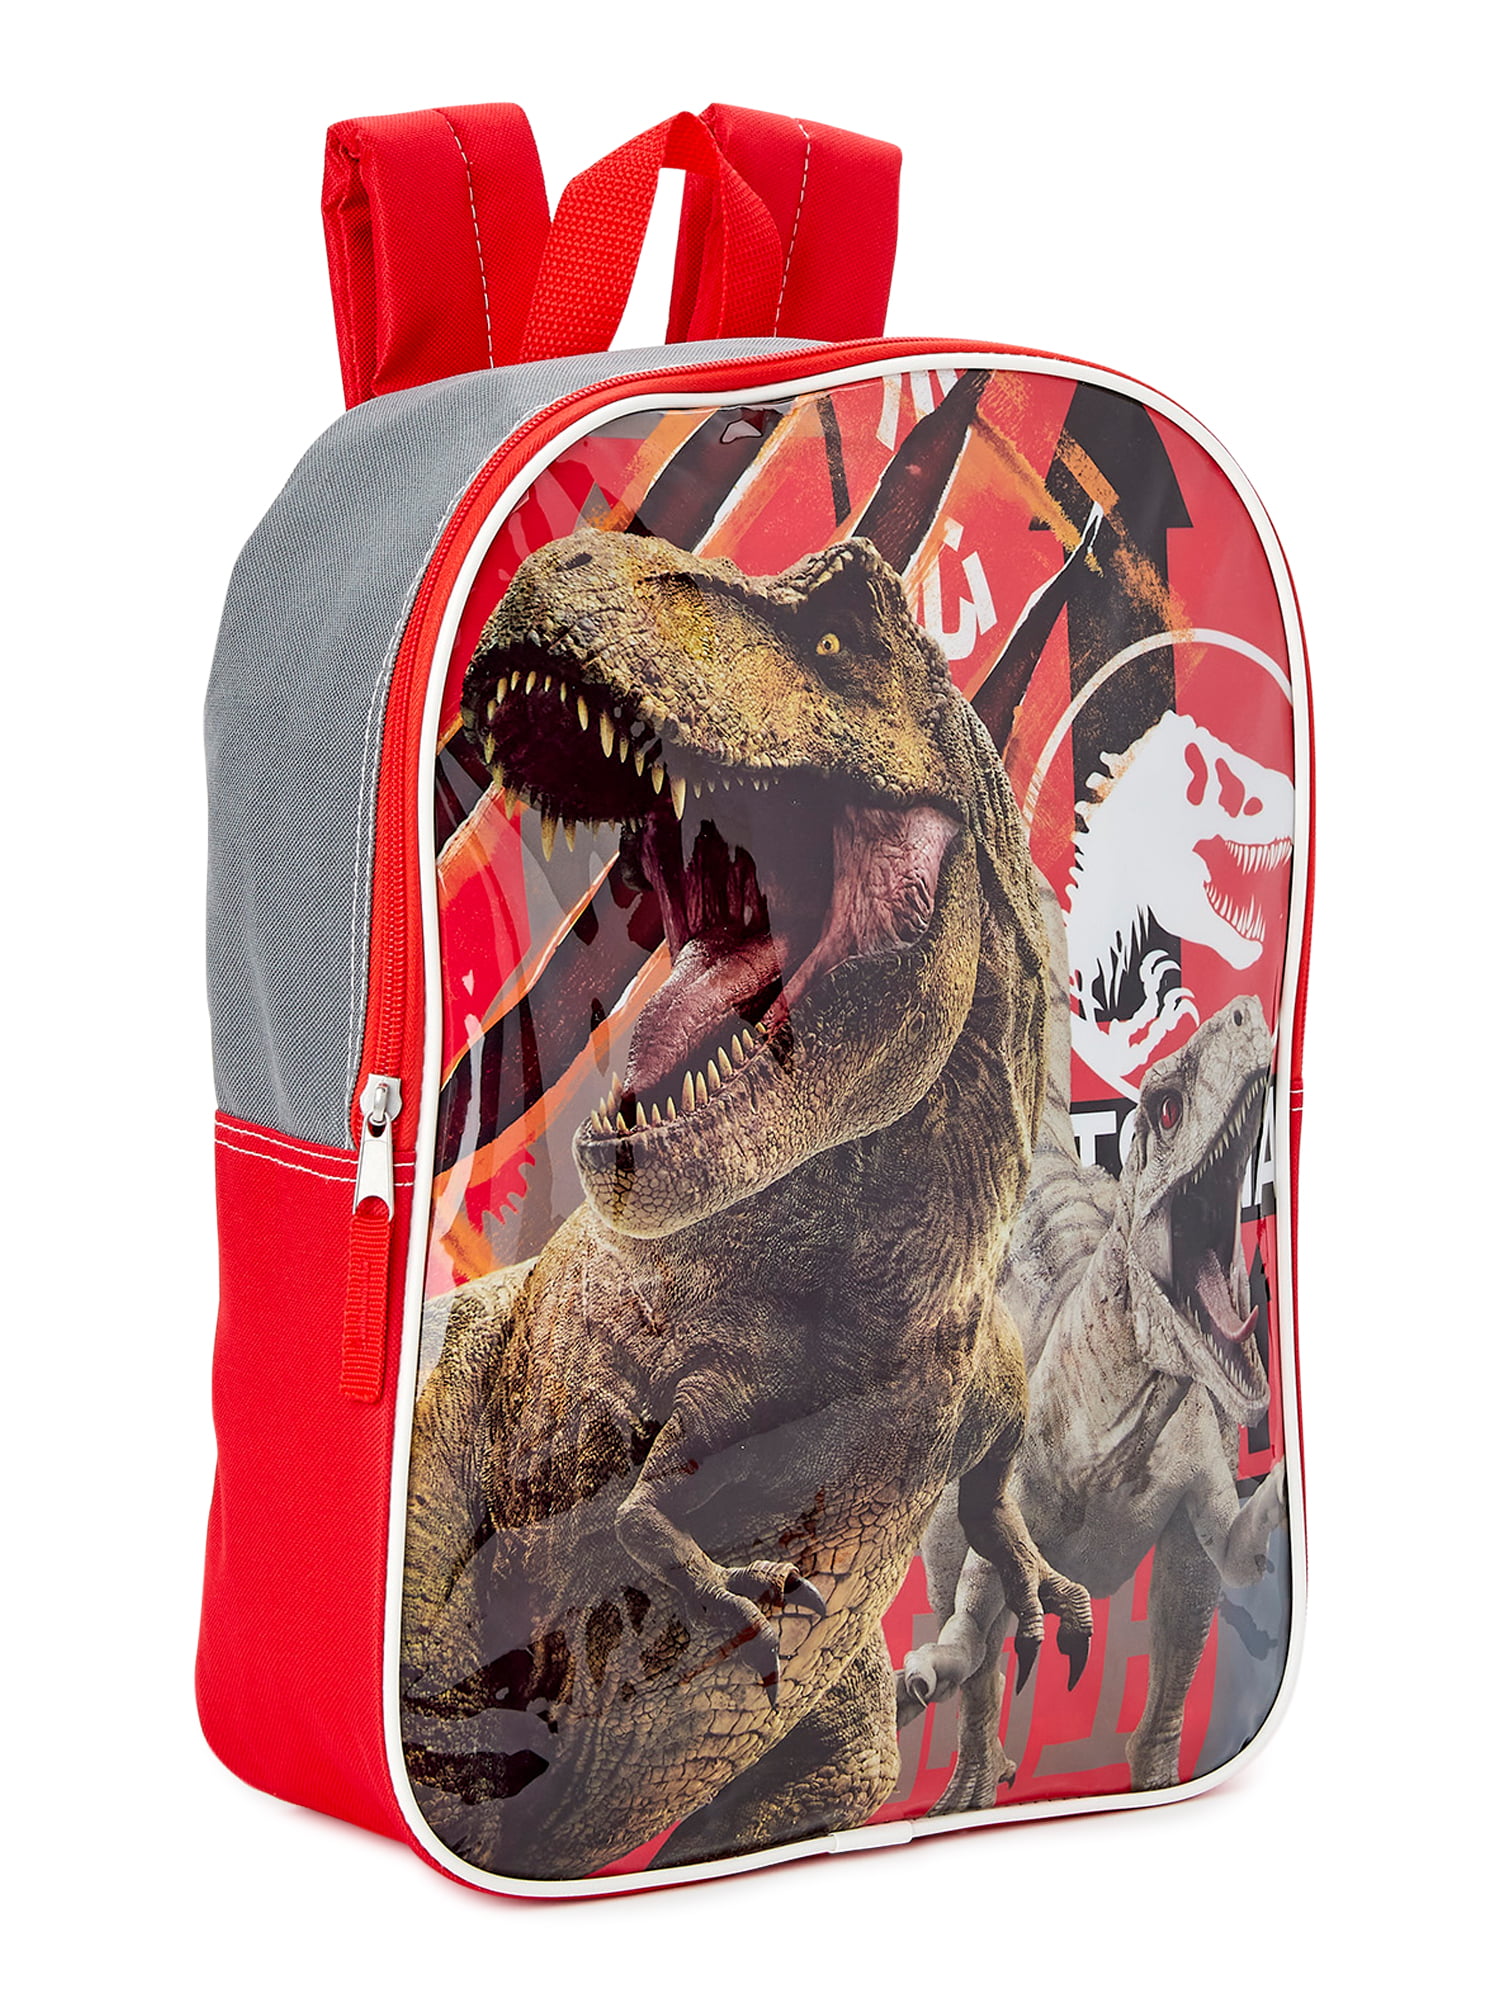 Jurassic World Dinasaur Print Boys Backpack Lunch Bag Tote Pen Case Kid Gift Lot 